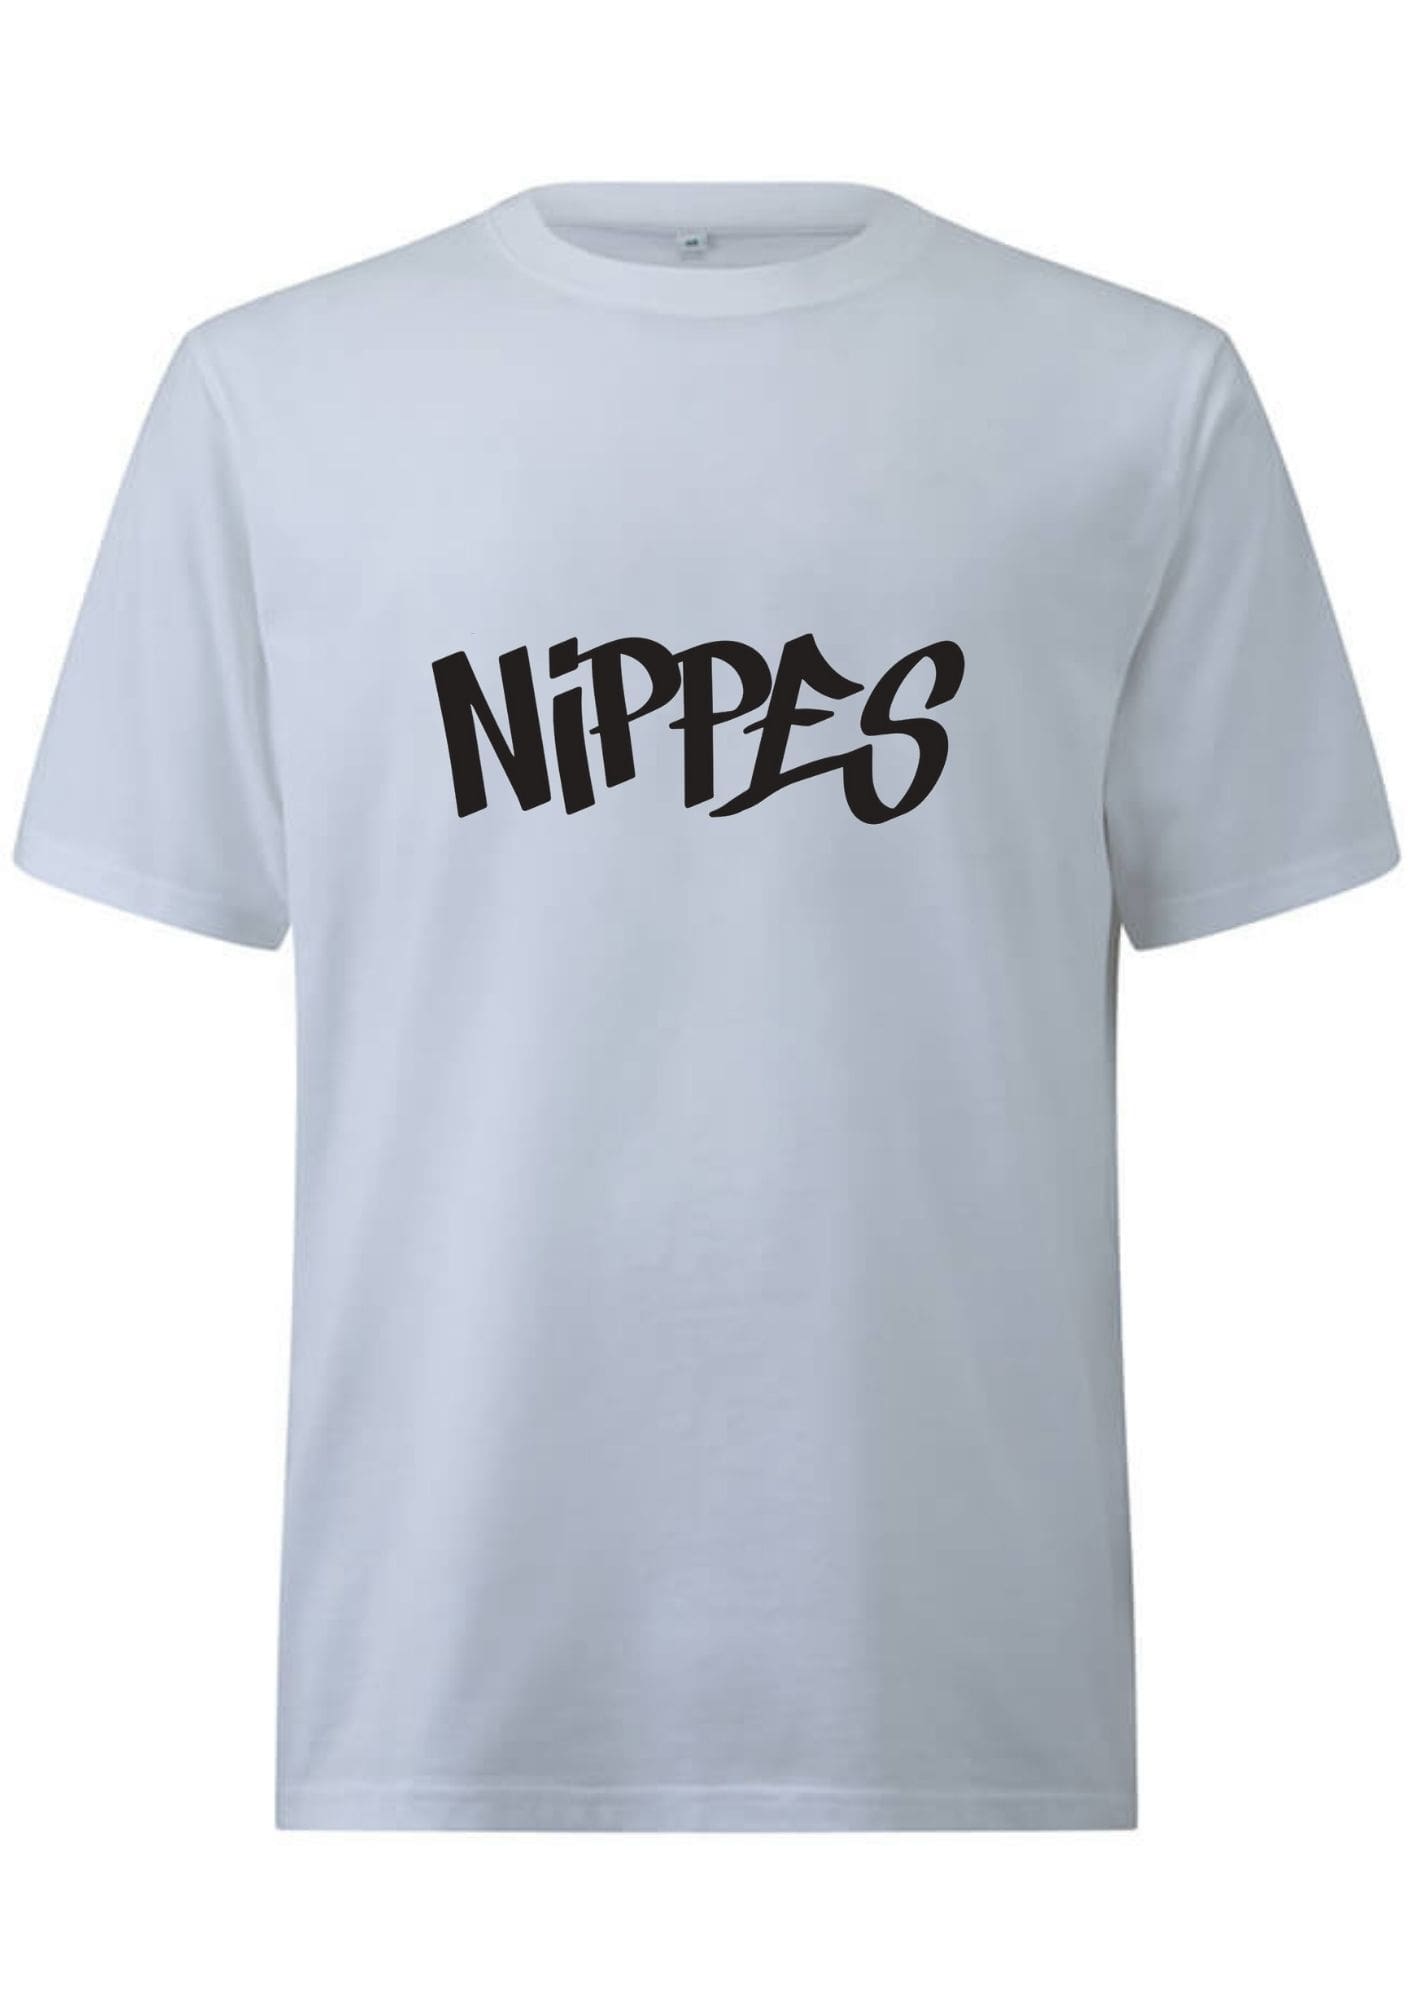 Nippes (Big Letters) Unisex T-Shirt